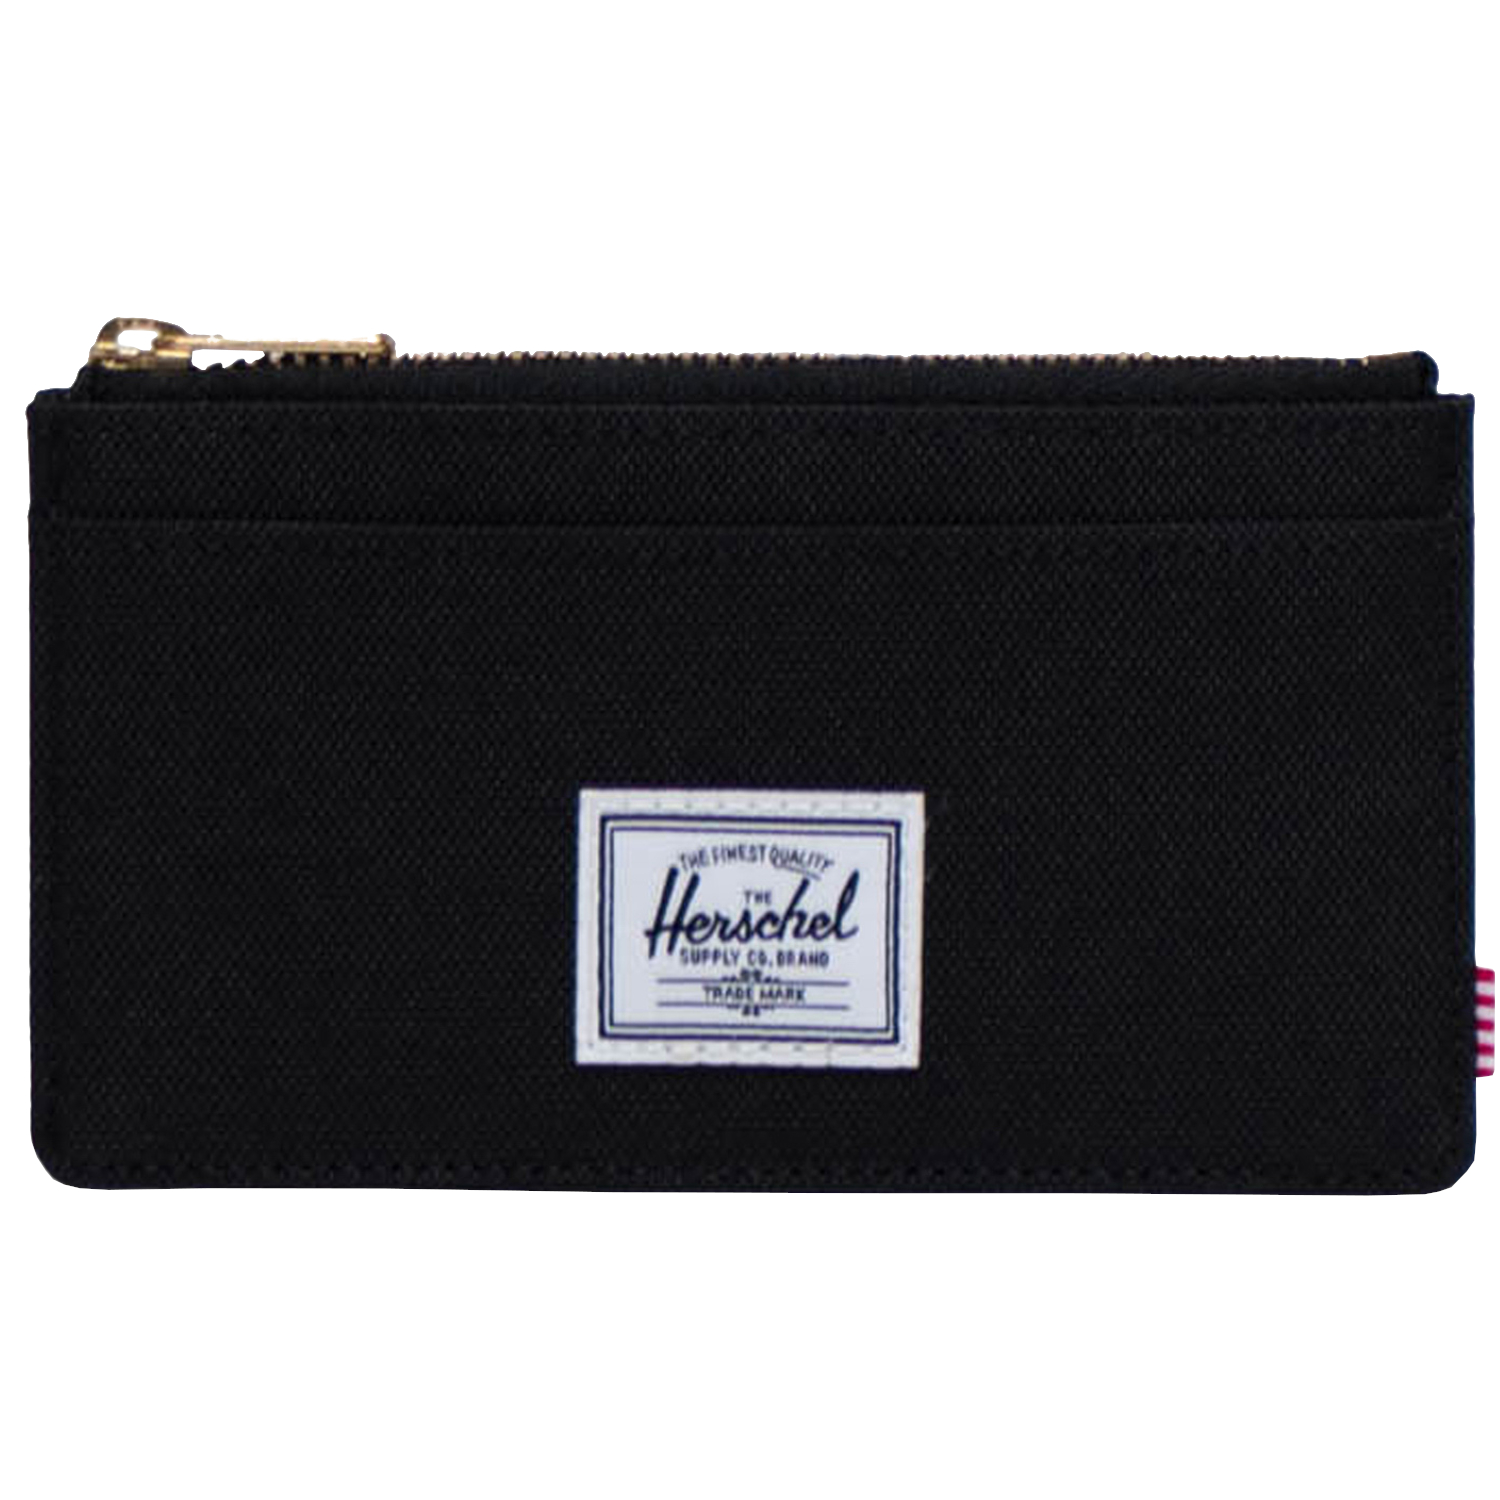 Кошелек Herschel Herschel Oscar Large Cardholder Wallet, черный кошелек herschel herschel oscar wallet черный